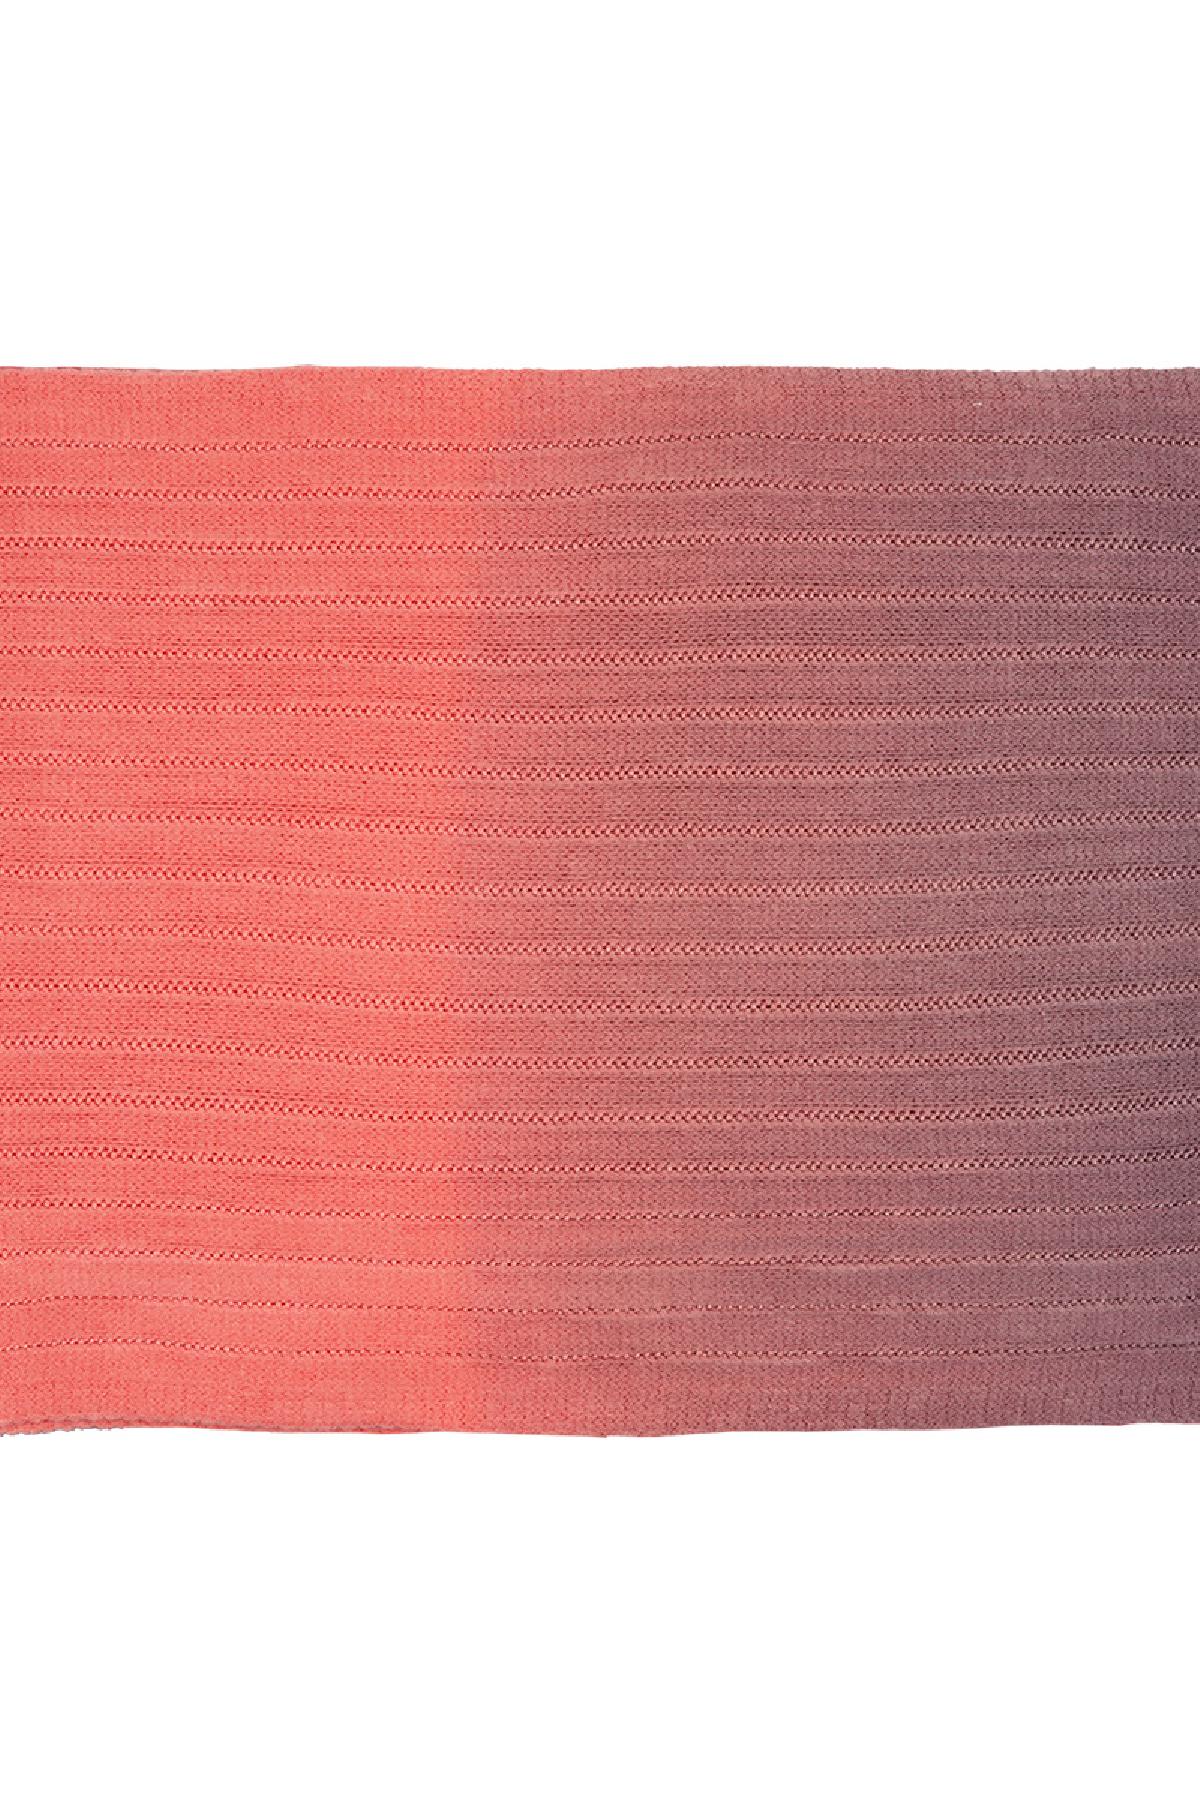 Écharpe tie-dye Orange Acrylique Image3